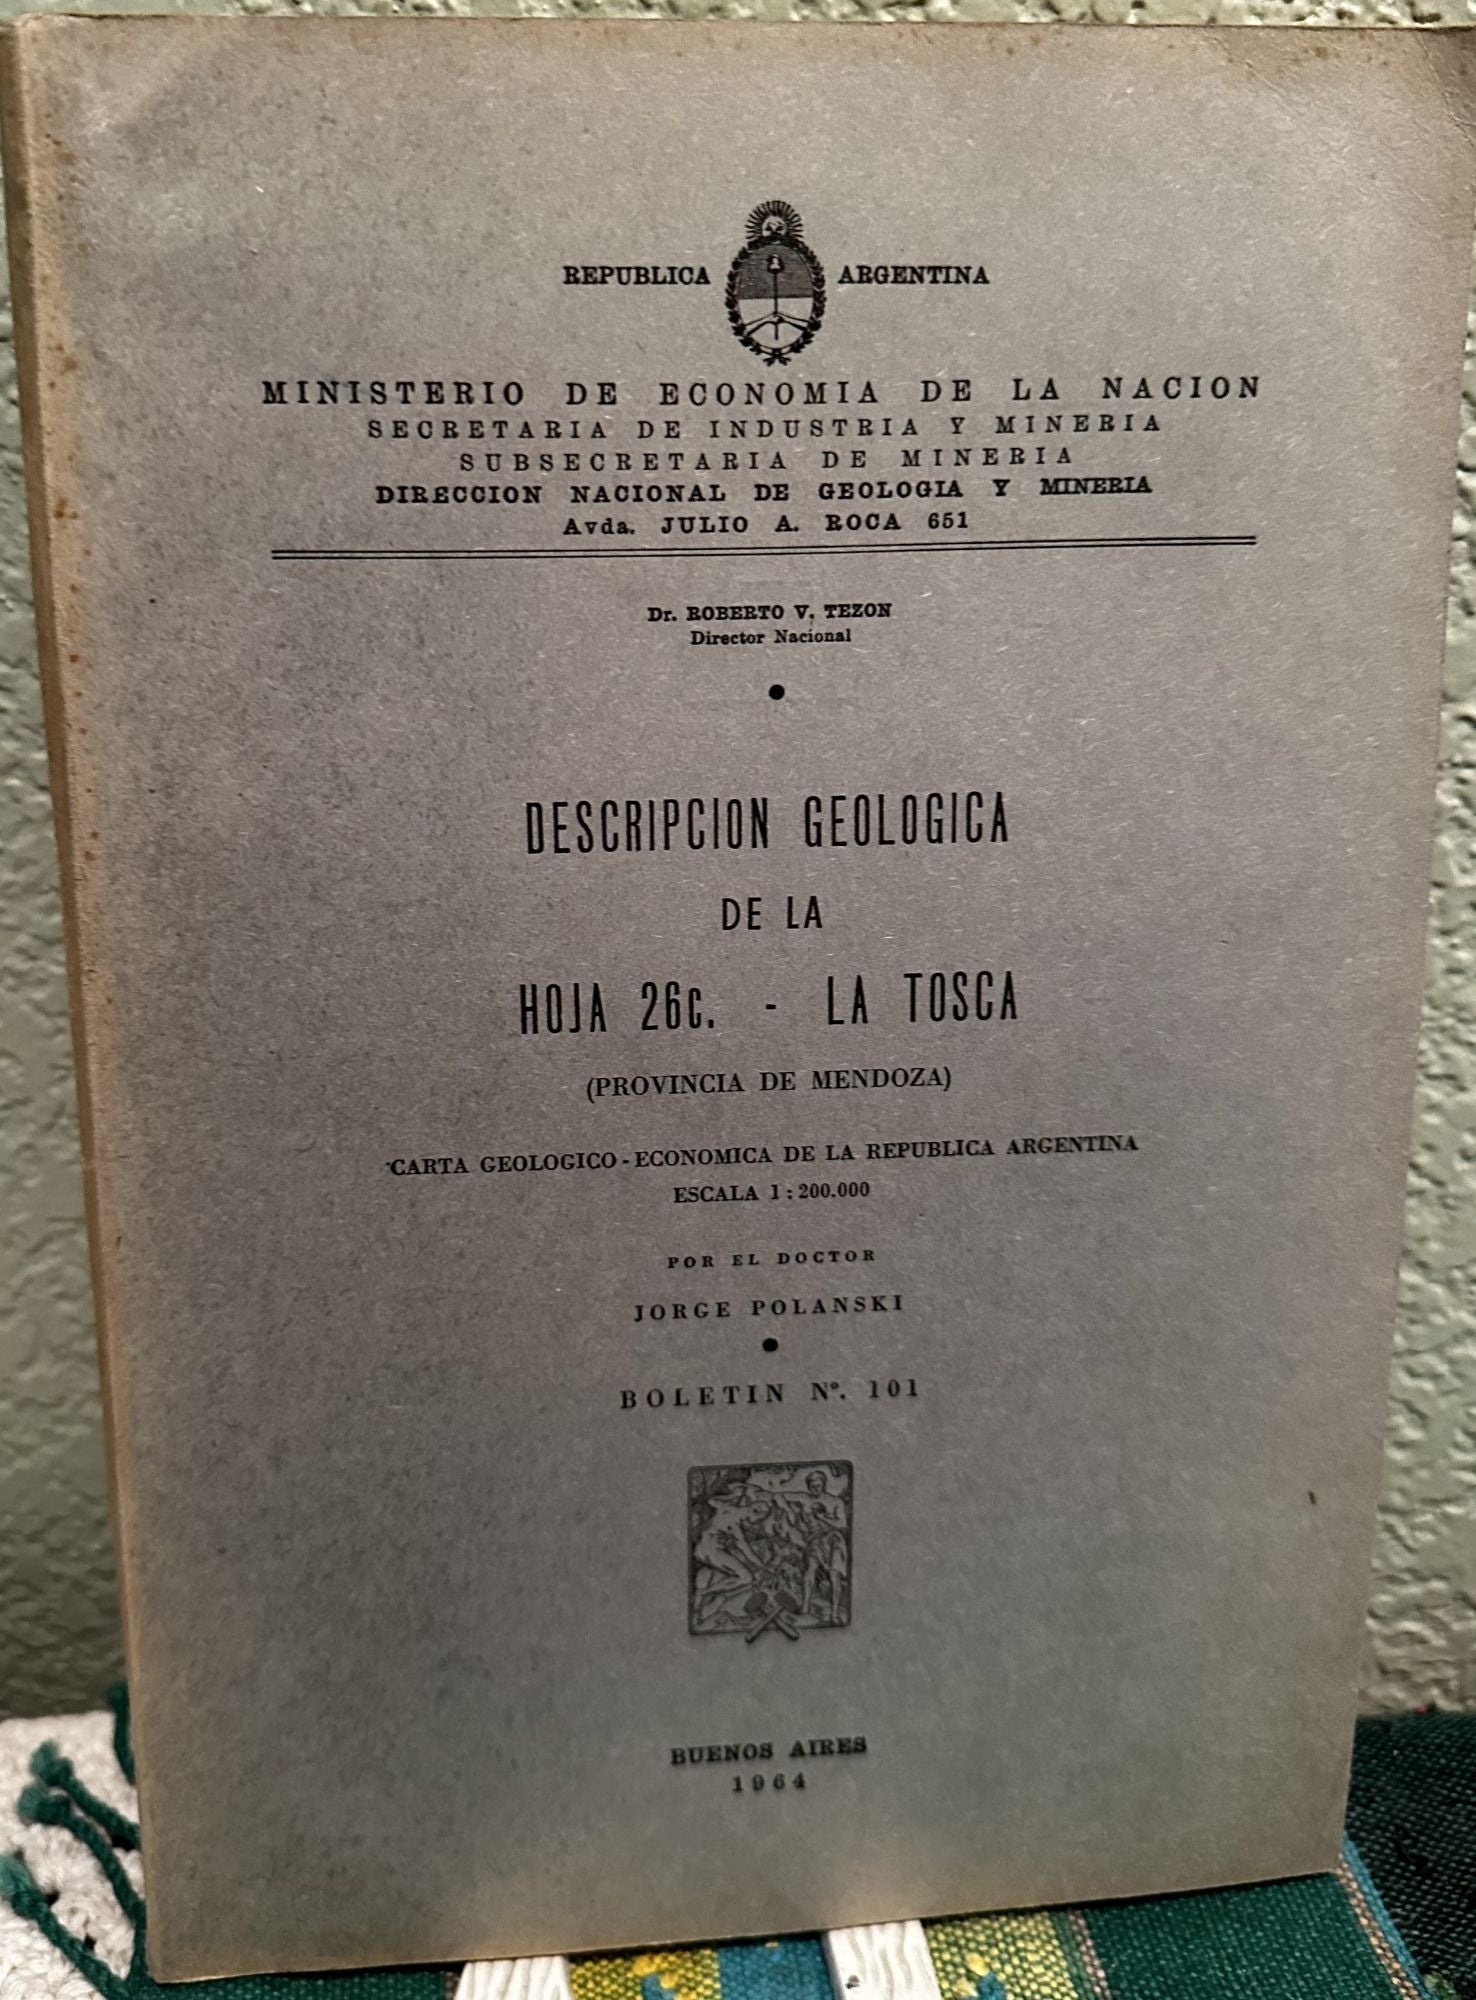 Descripcion Geologica De La Hoja 26c, La Tosca Provincia De Mendoza. Jorge Polanski.